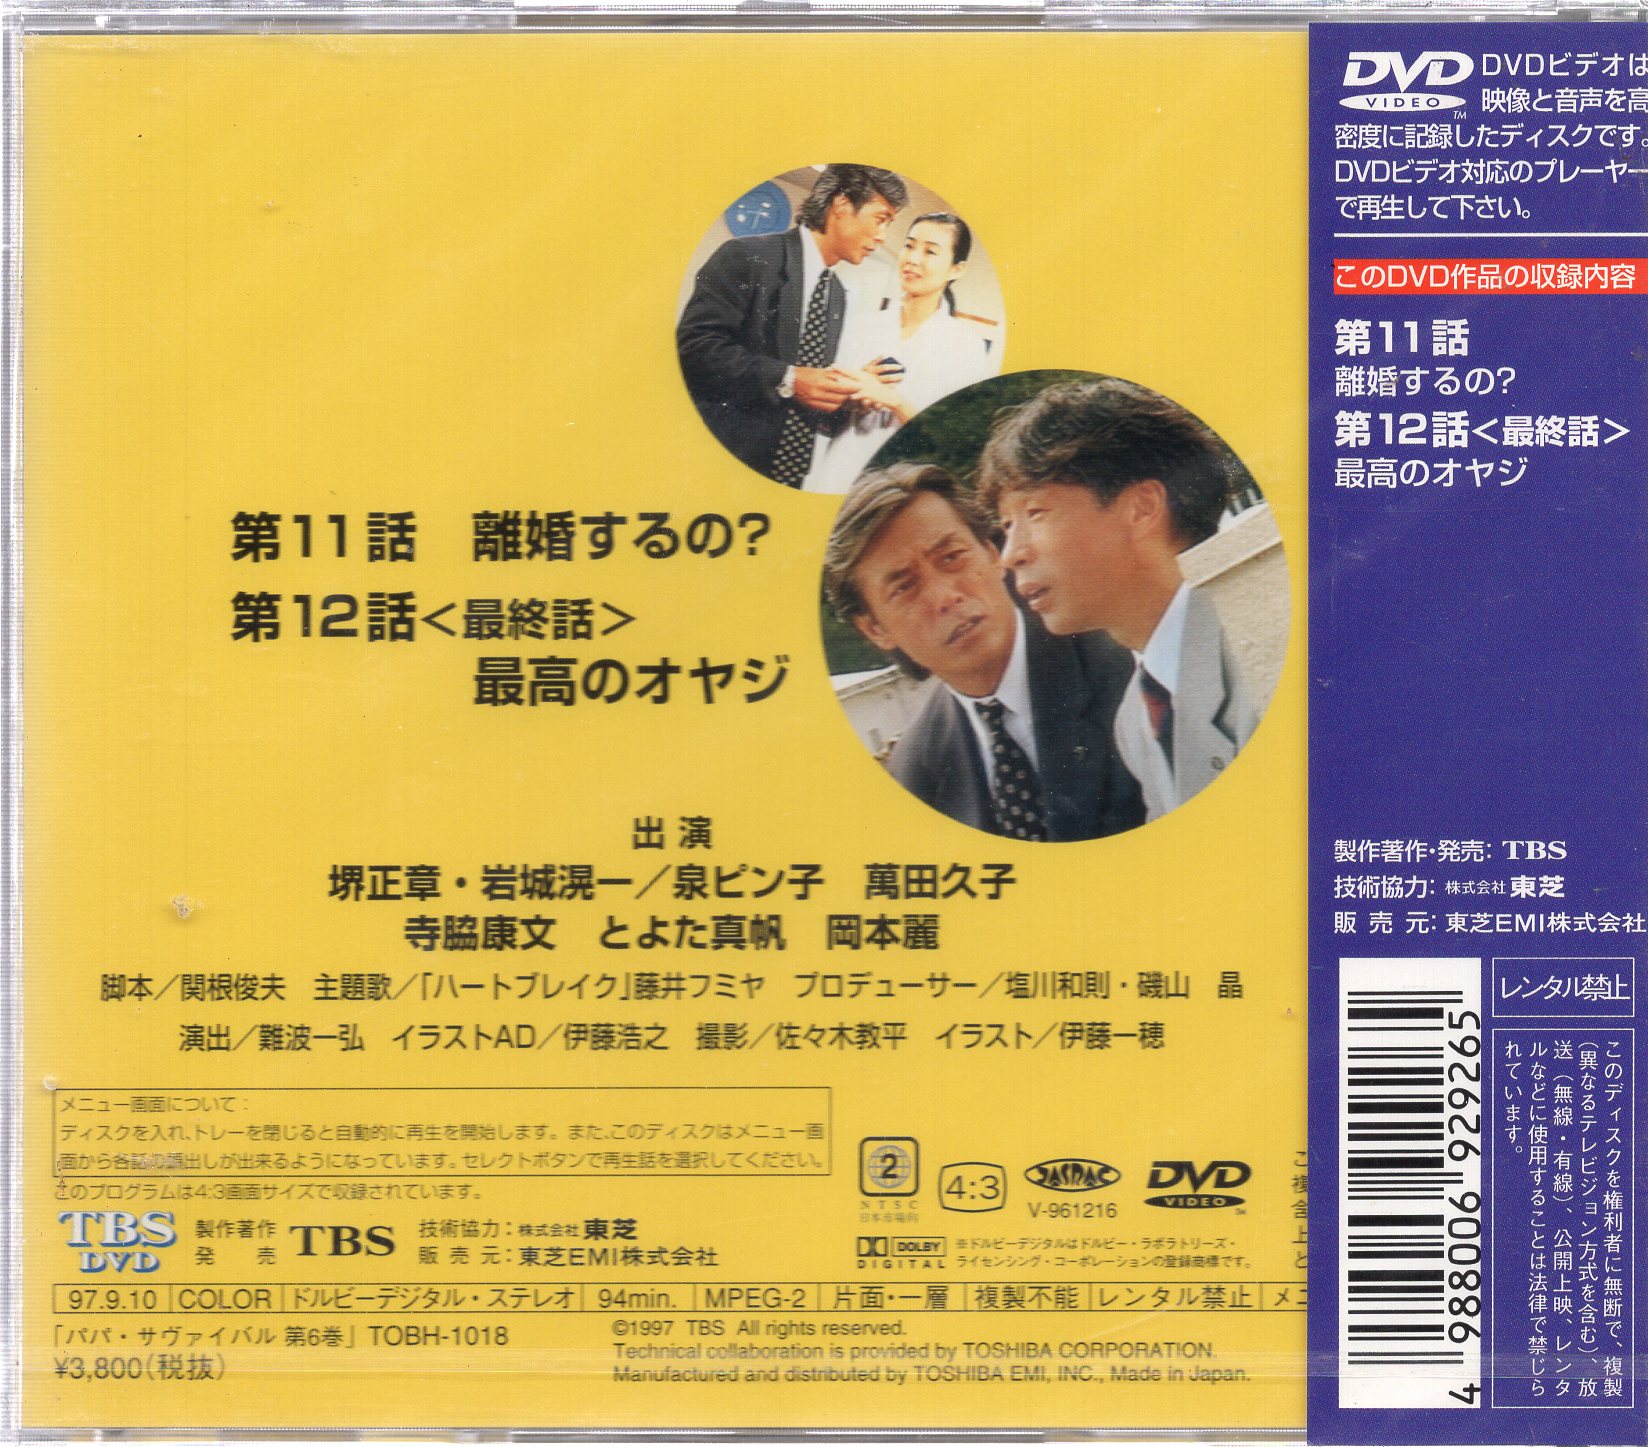 TBS DVD おとうさん全6巻 [DVDセット] :old-07H5G9DZ8:Mikan DEPT.jp